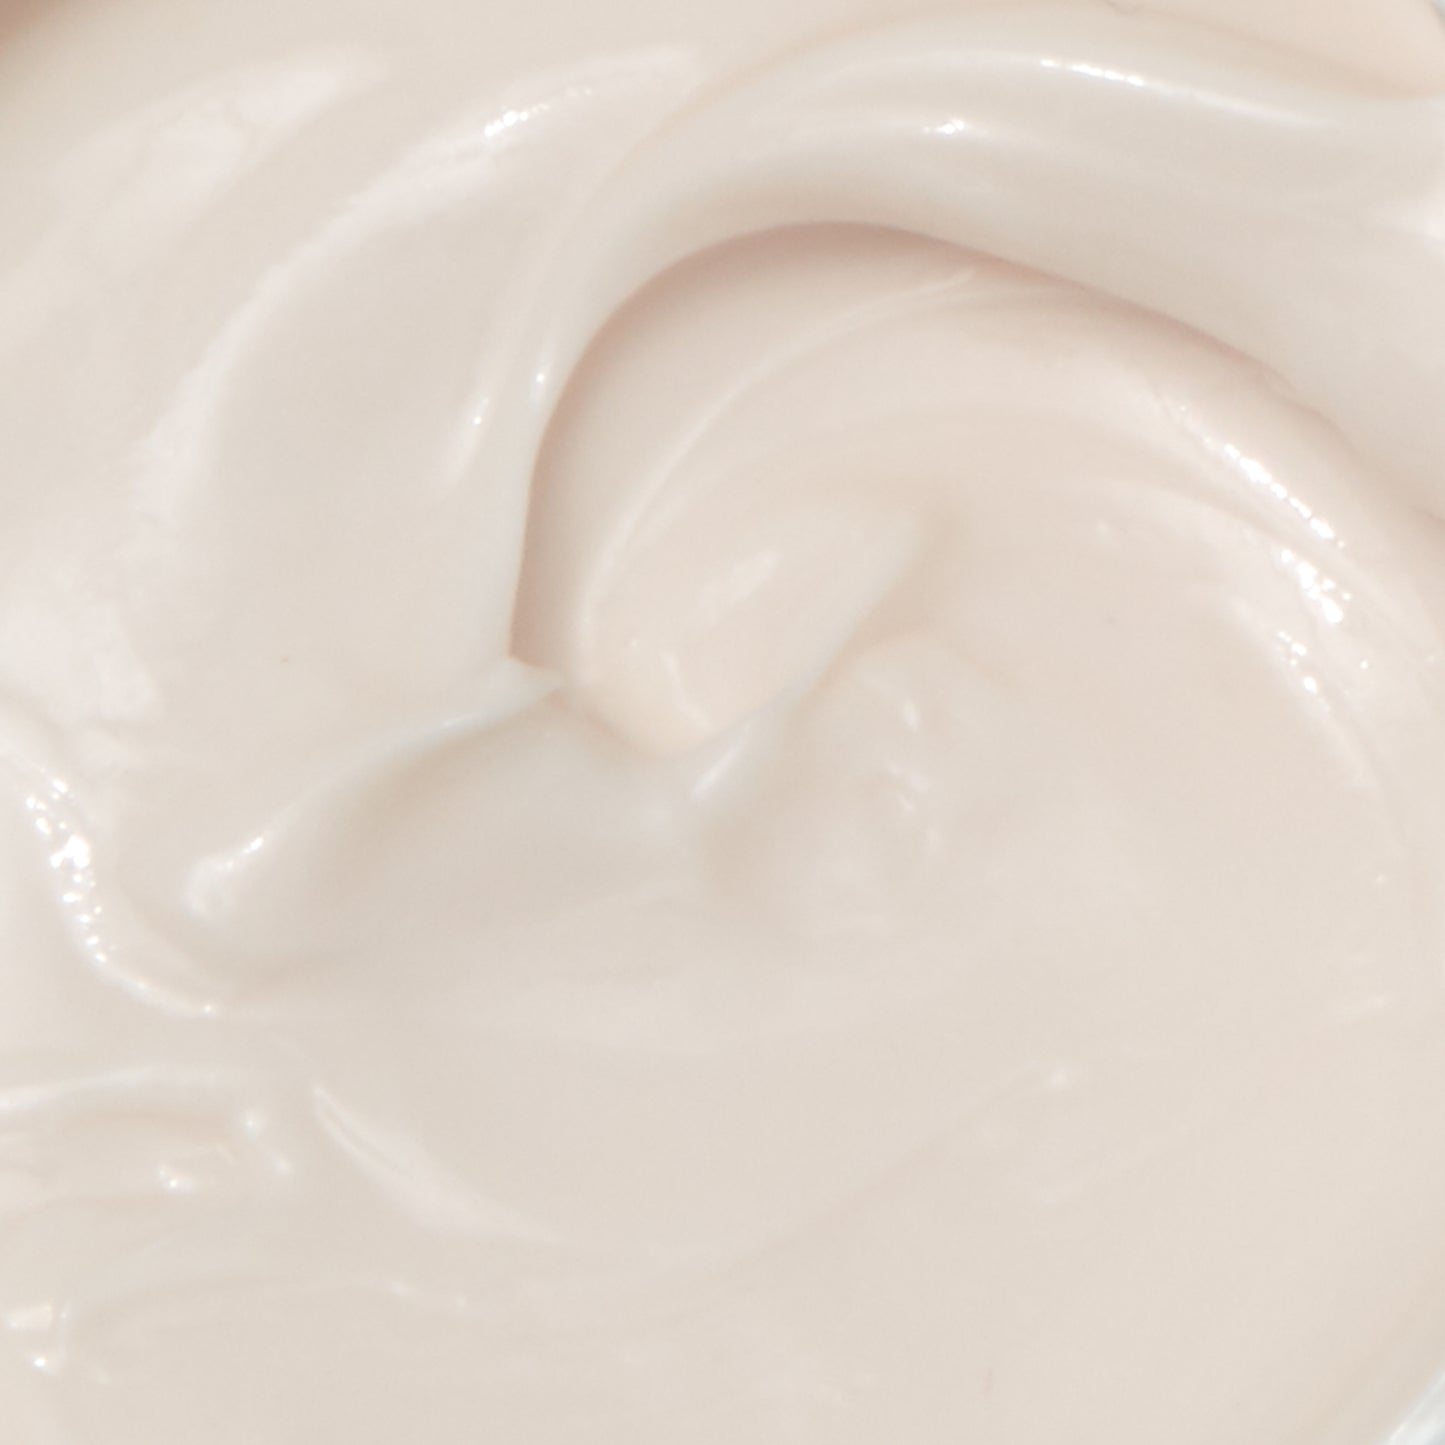 Elasto-Seamollient Hand Cream